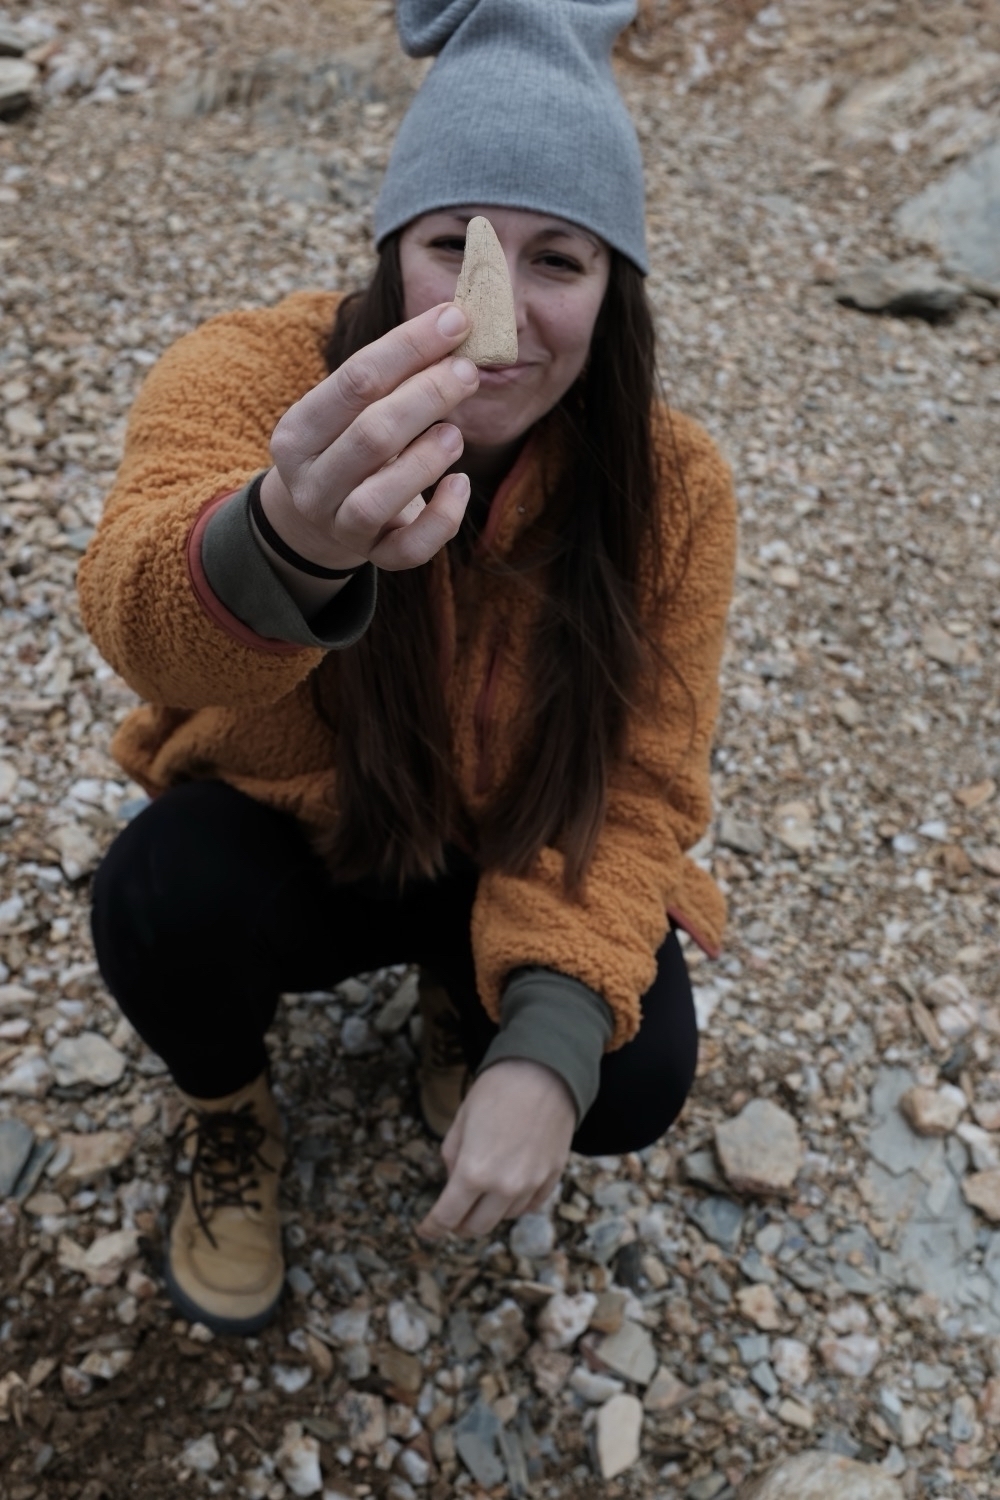 Kalena holding rock